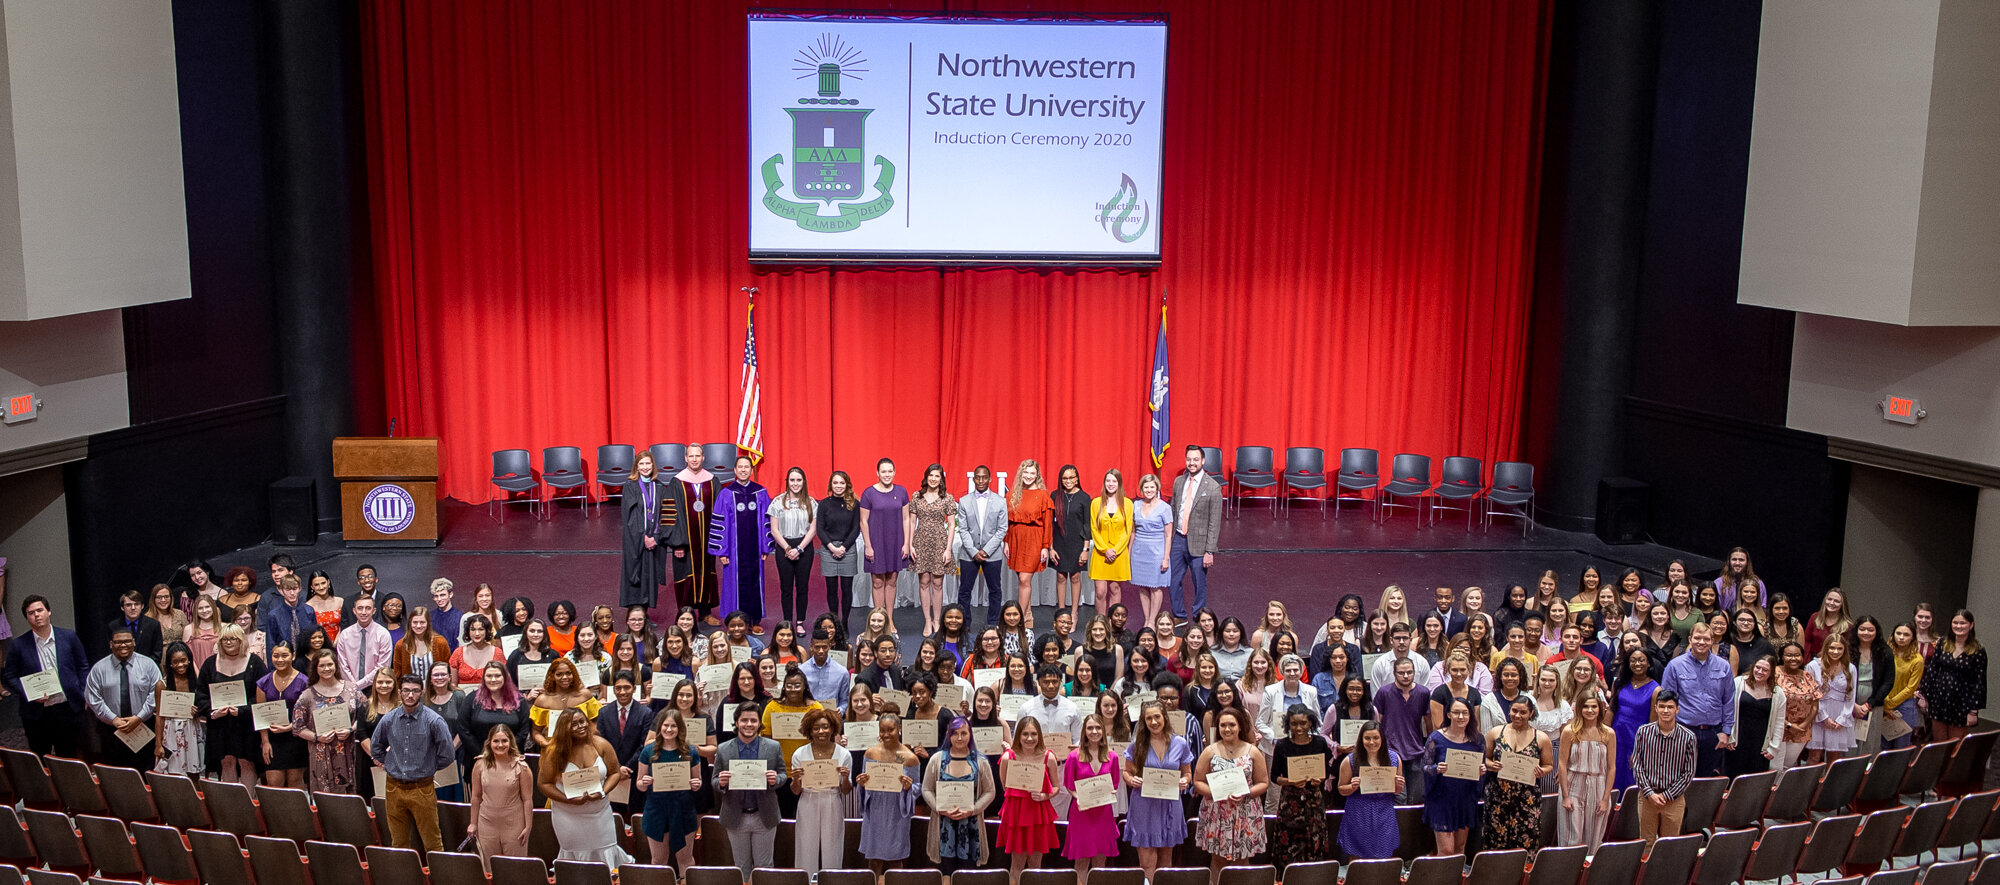 Northwestern State ALD Induction Group Photo 2020.jpg